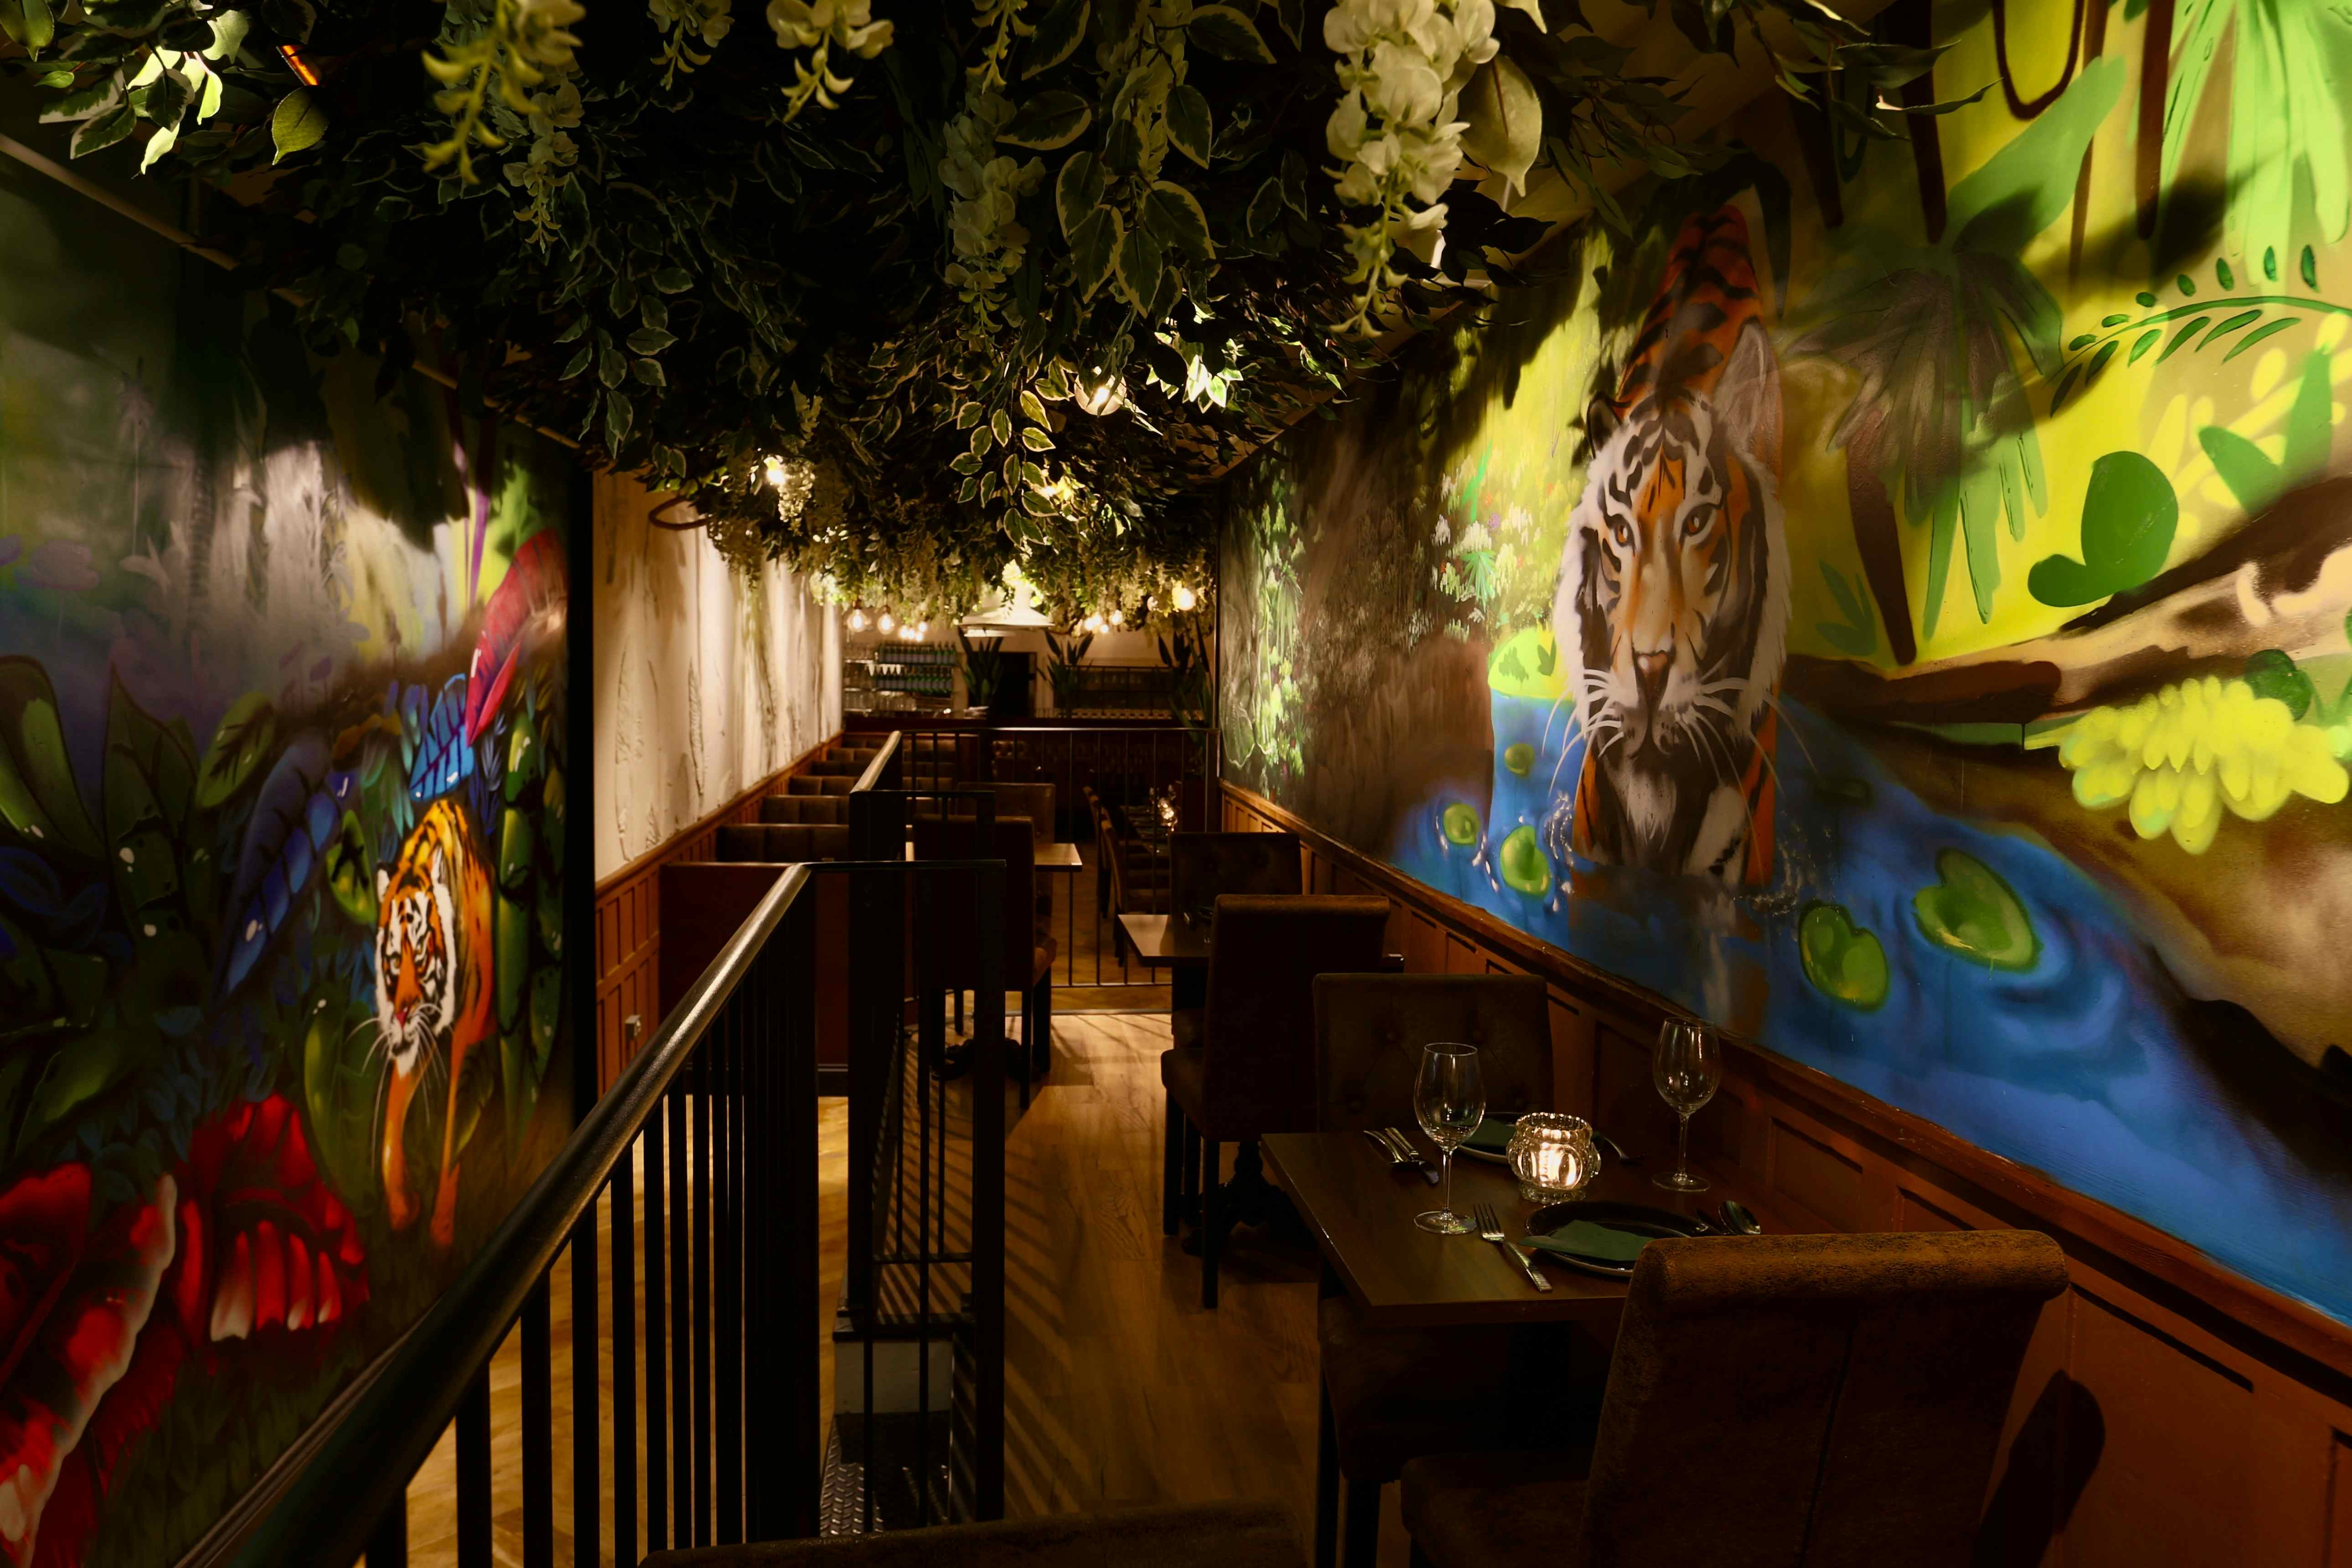 RESTAURANT, PARO -Awarded Best Indian Restaurant in London